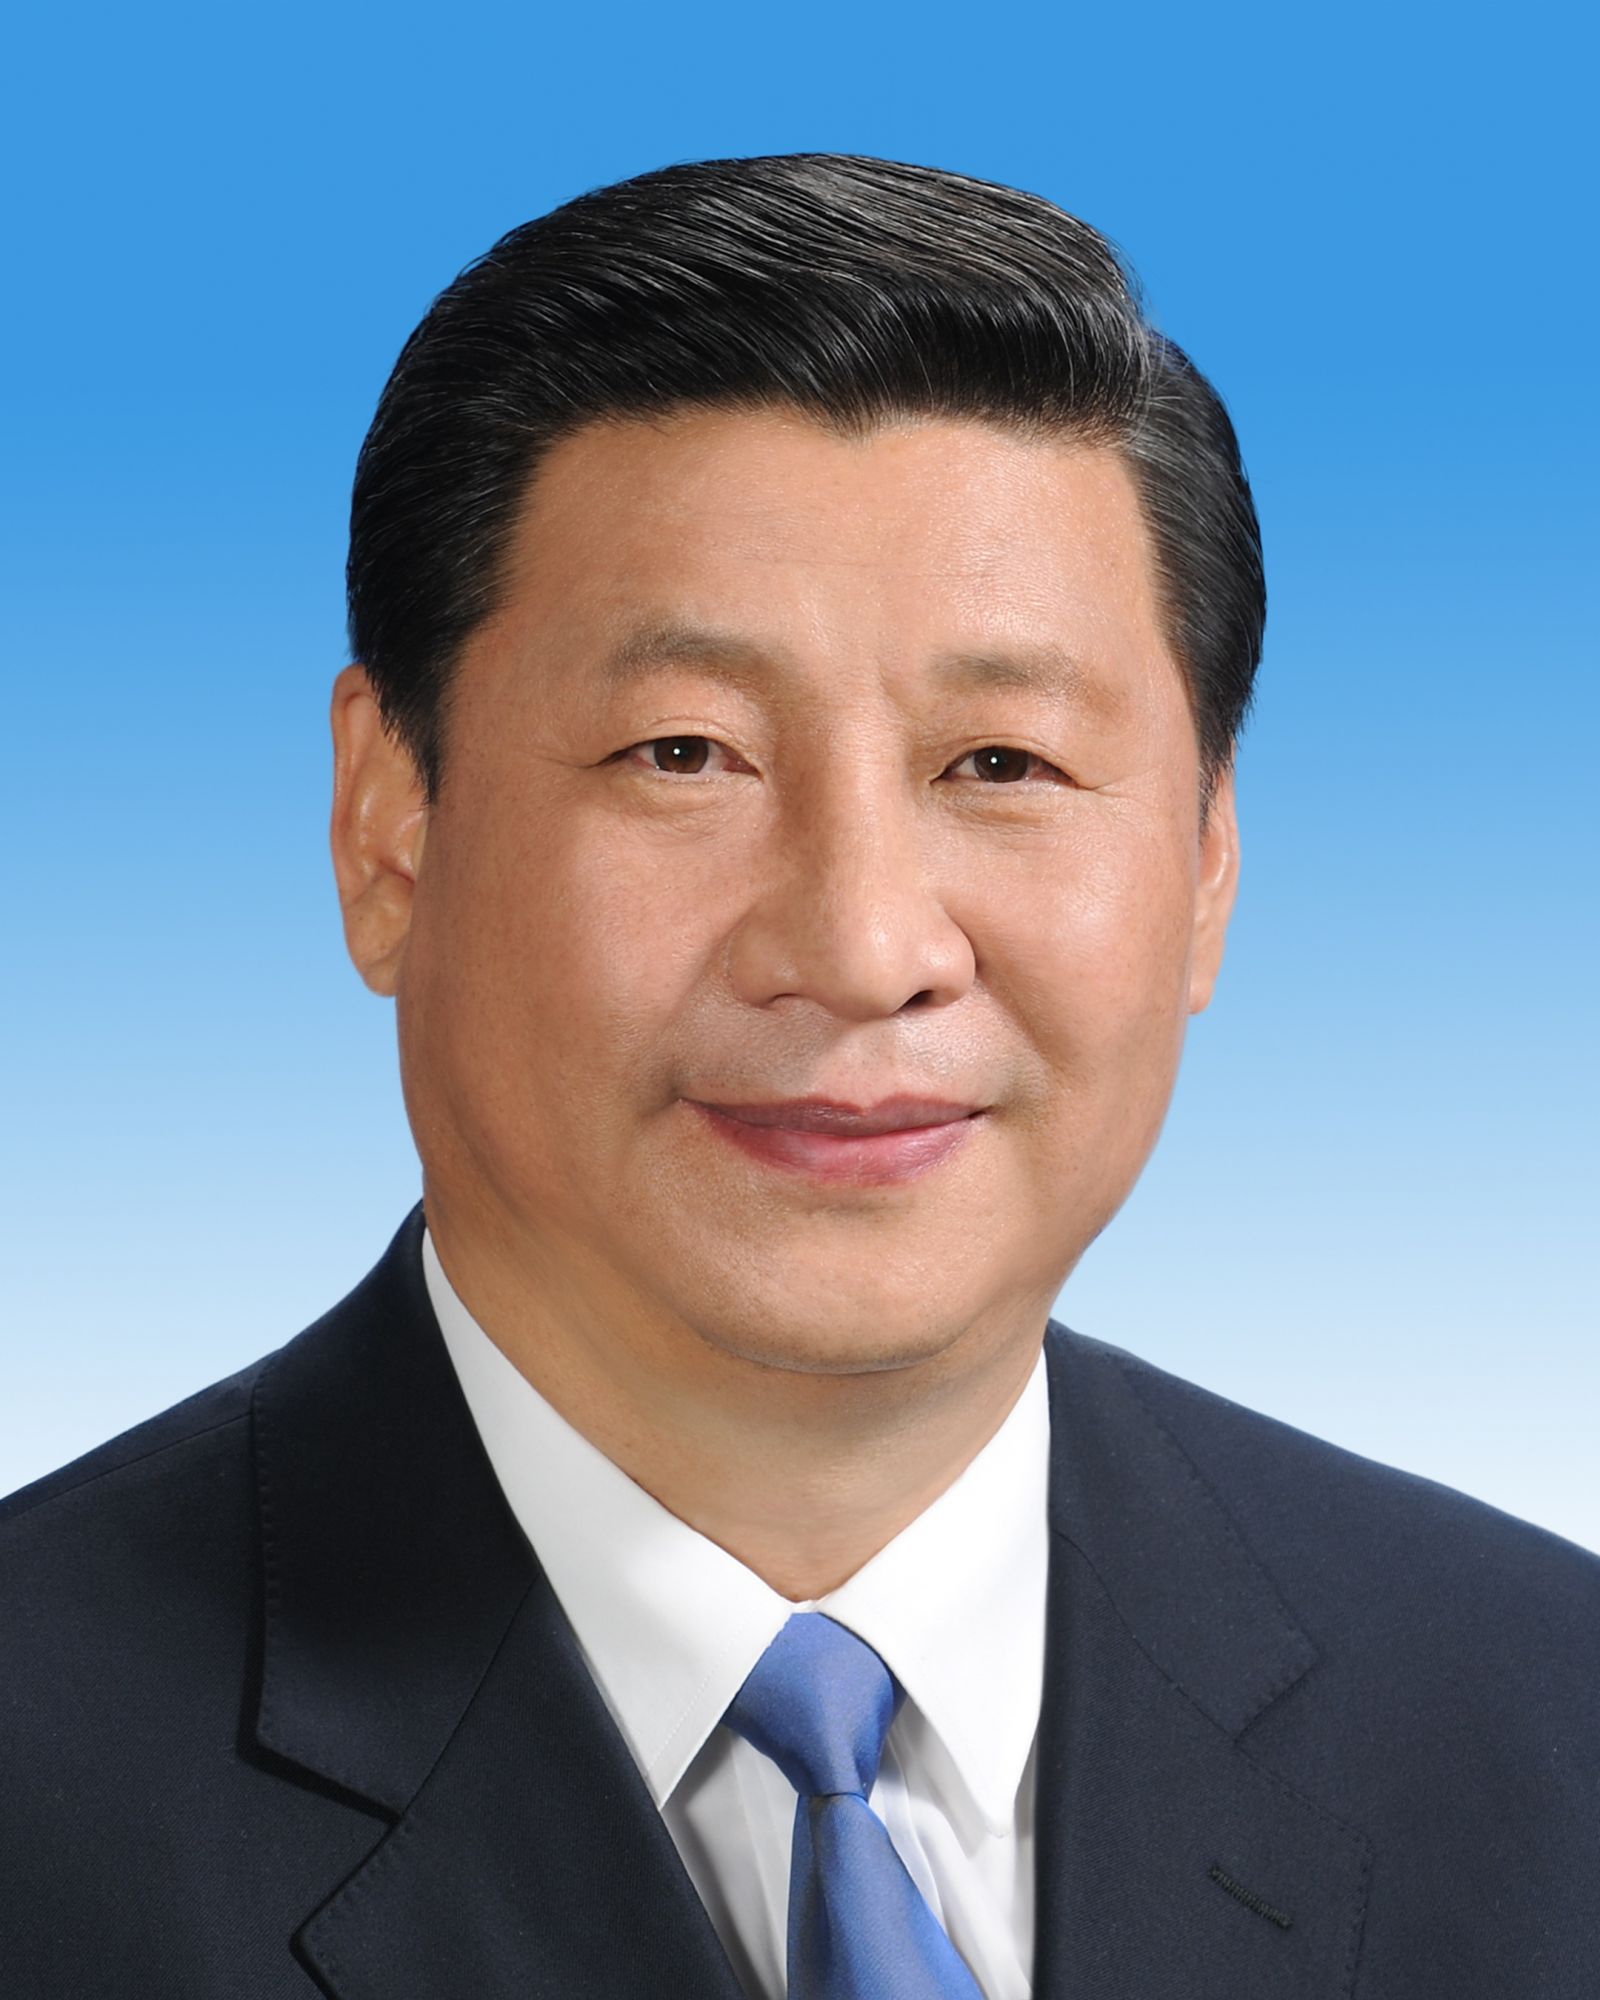 File:Xi Jinping portrait.jpeg